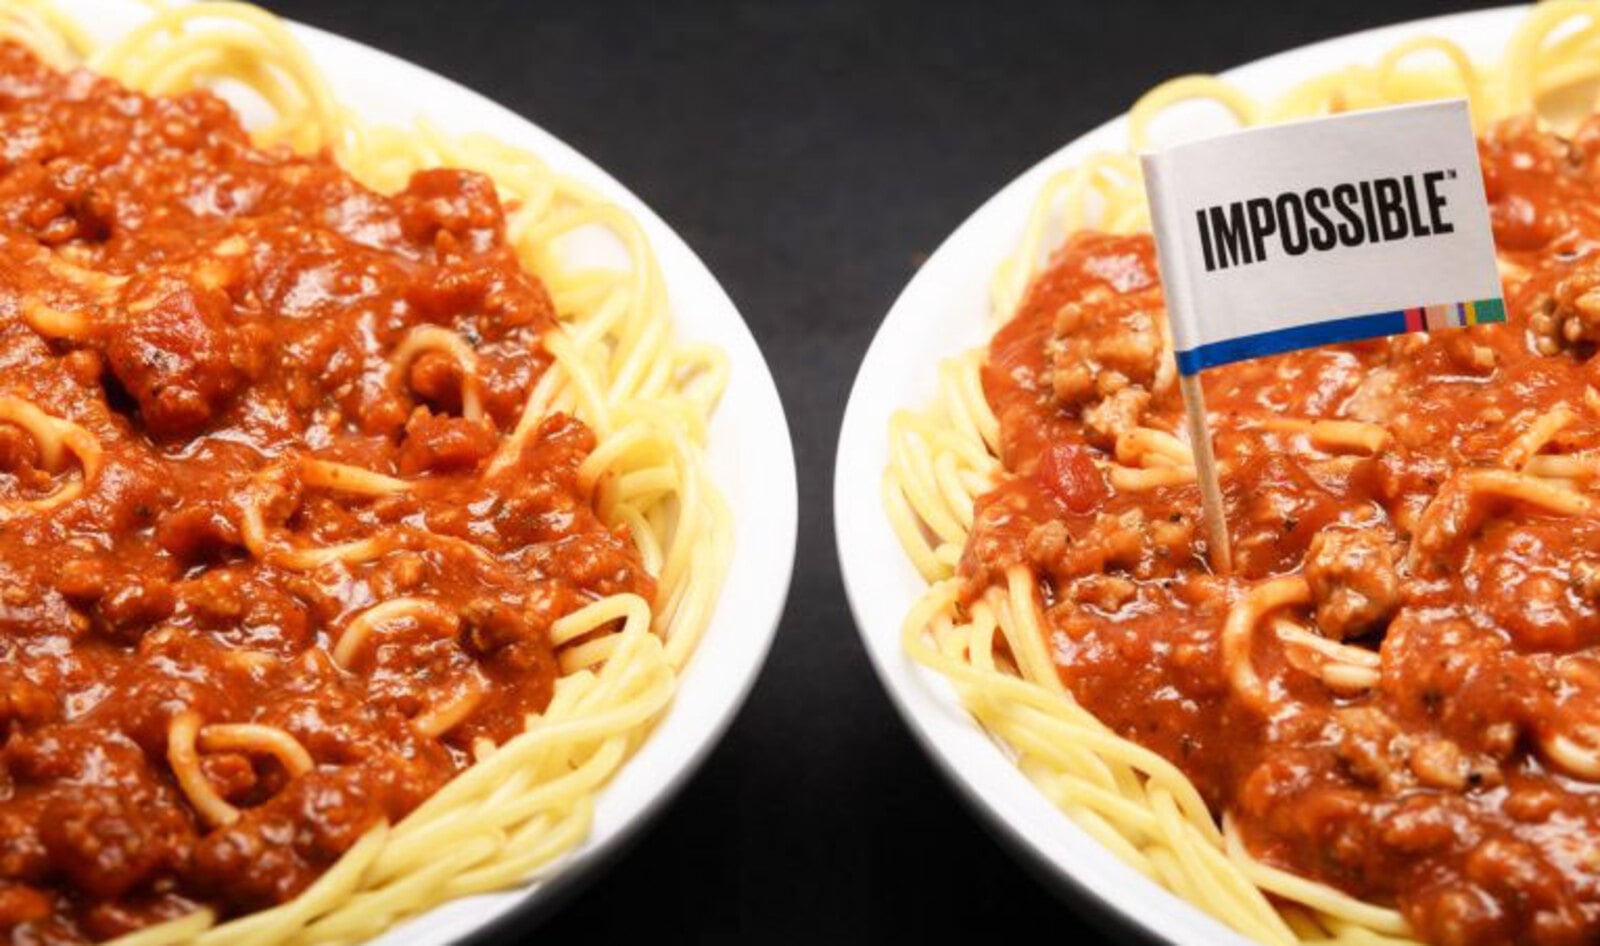 Major Italian Chain Fazoli’s Tests Plant-Based Impossible Meat Spaghetti Sauce&nbsp;